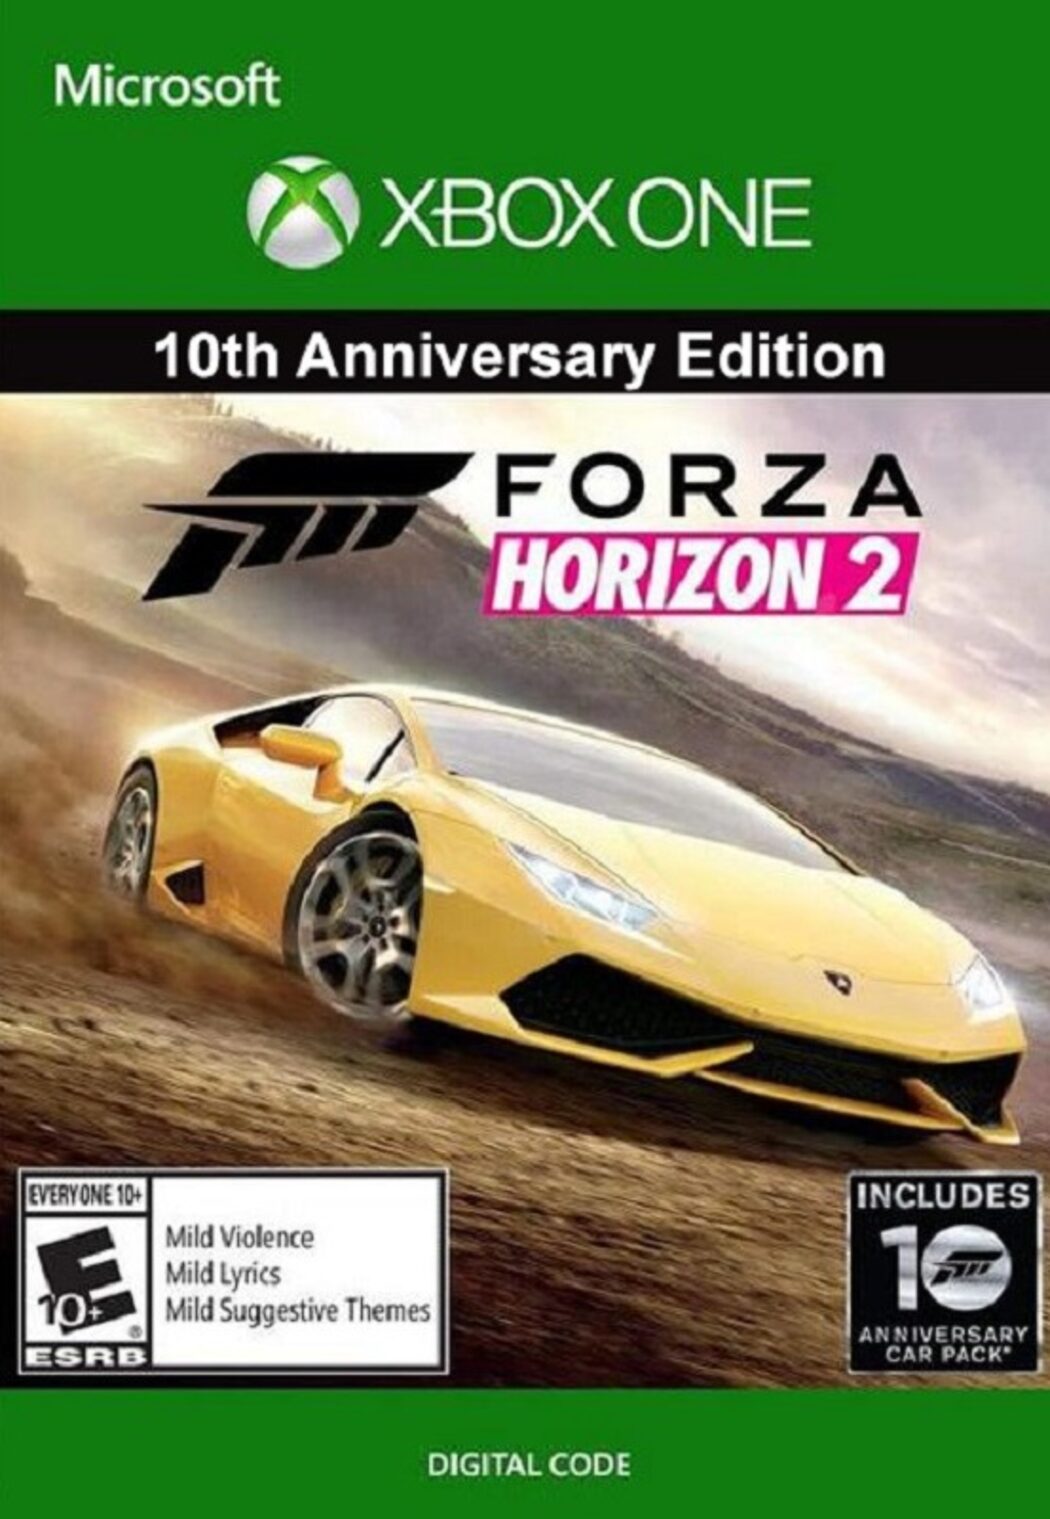 First play: Forza Horizon 2